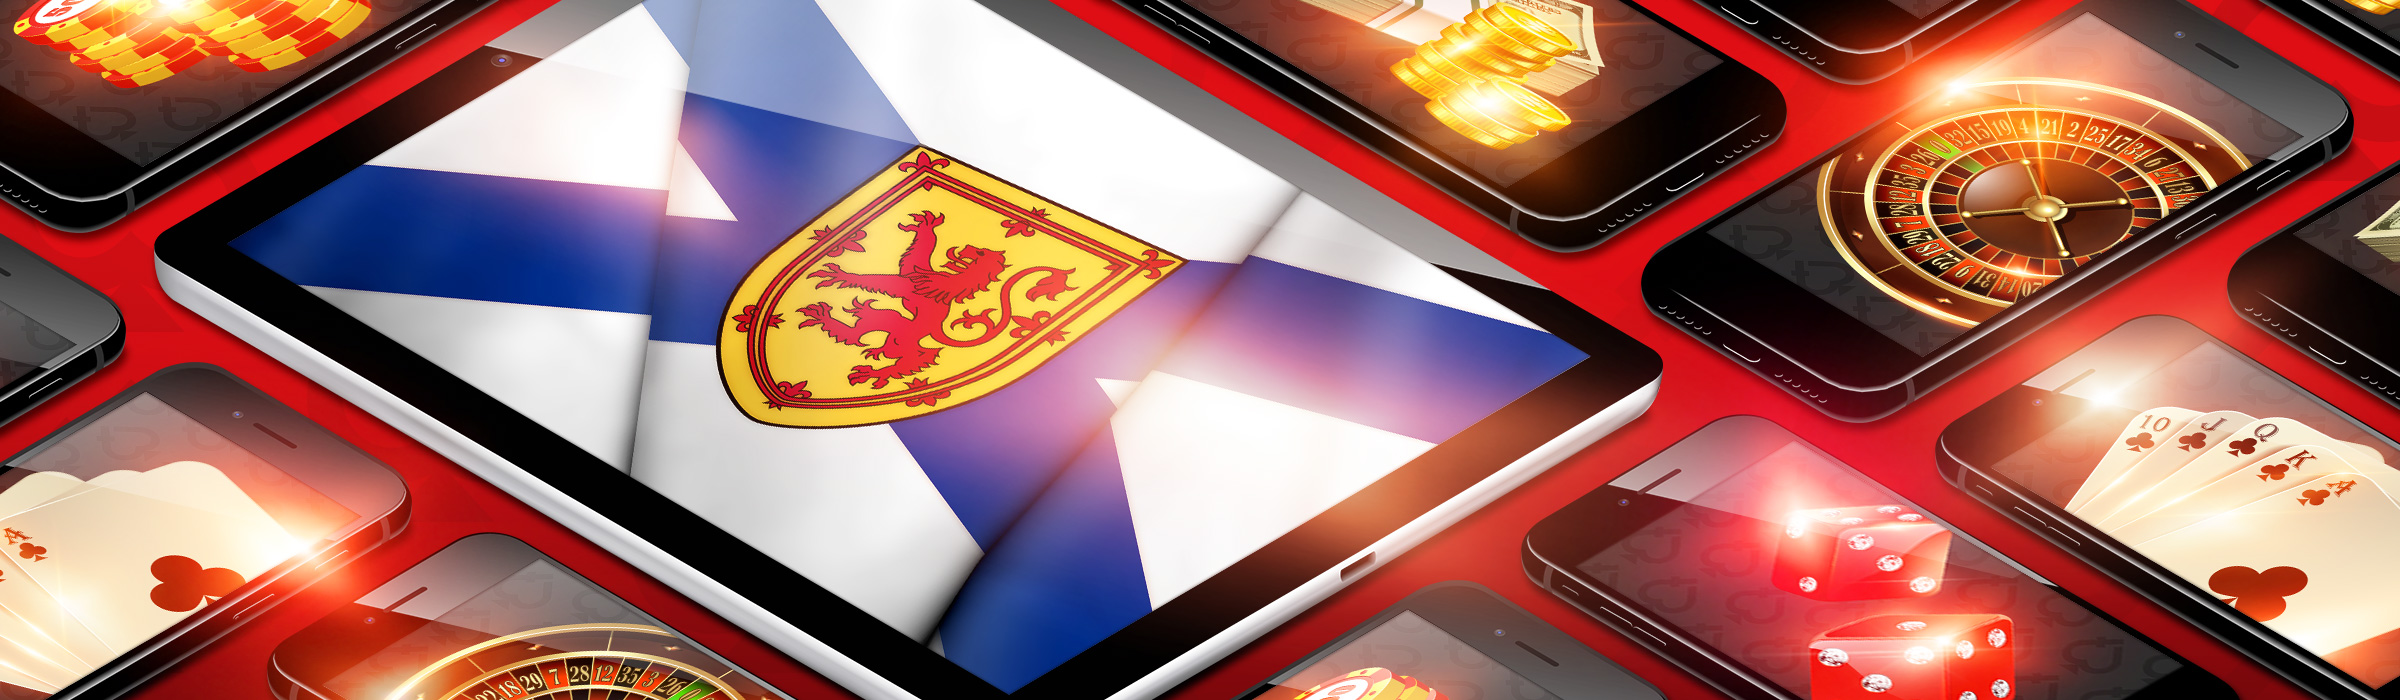 Nova Scotia Gaming Corporation to Launch Online Casino